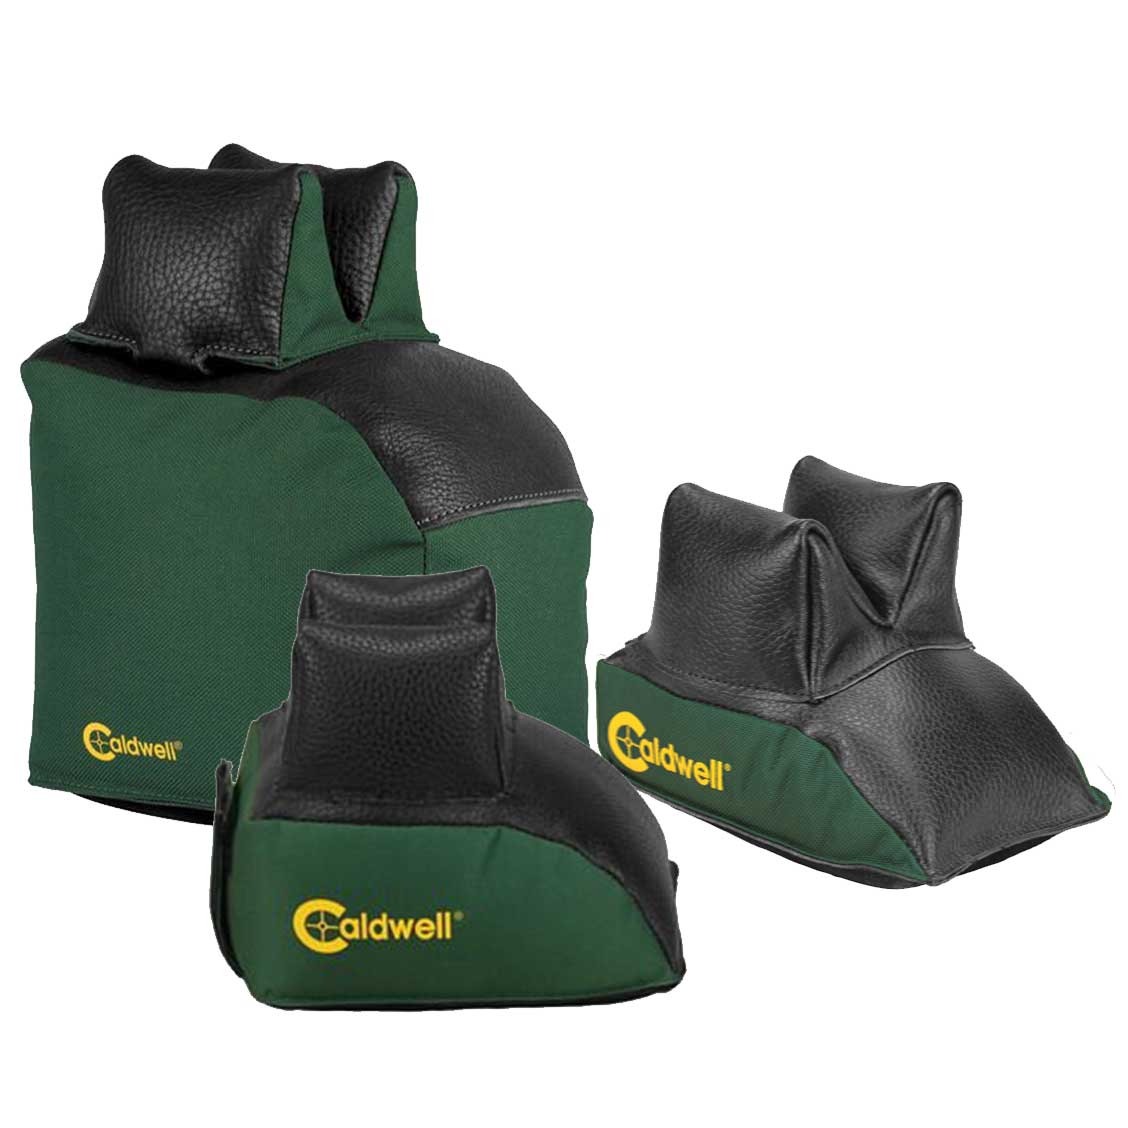 Universal Rear Shooting Bags, 3 Sizes